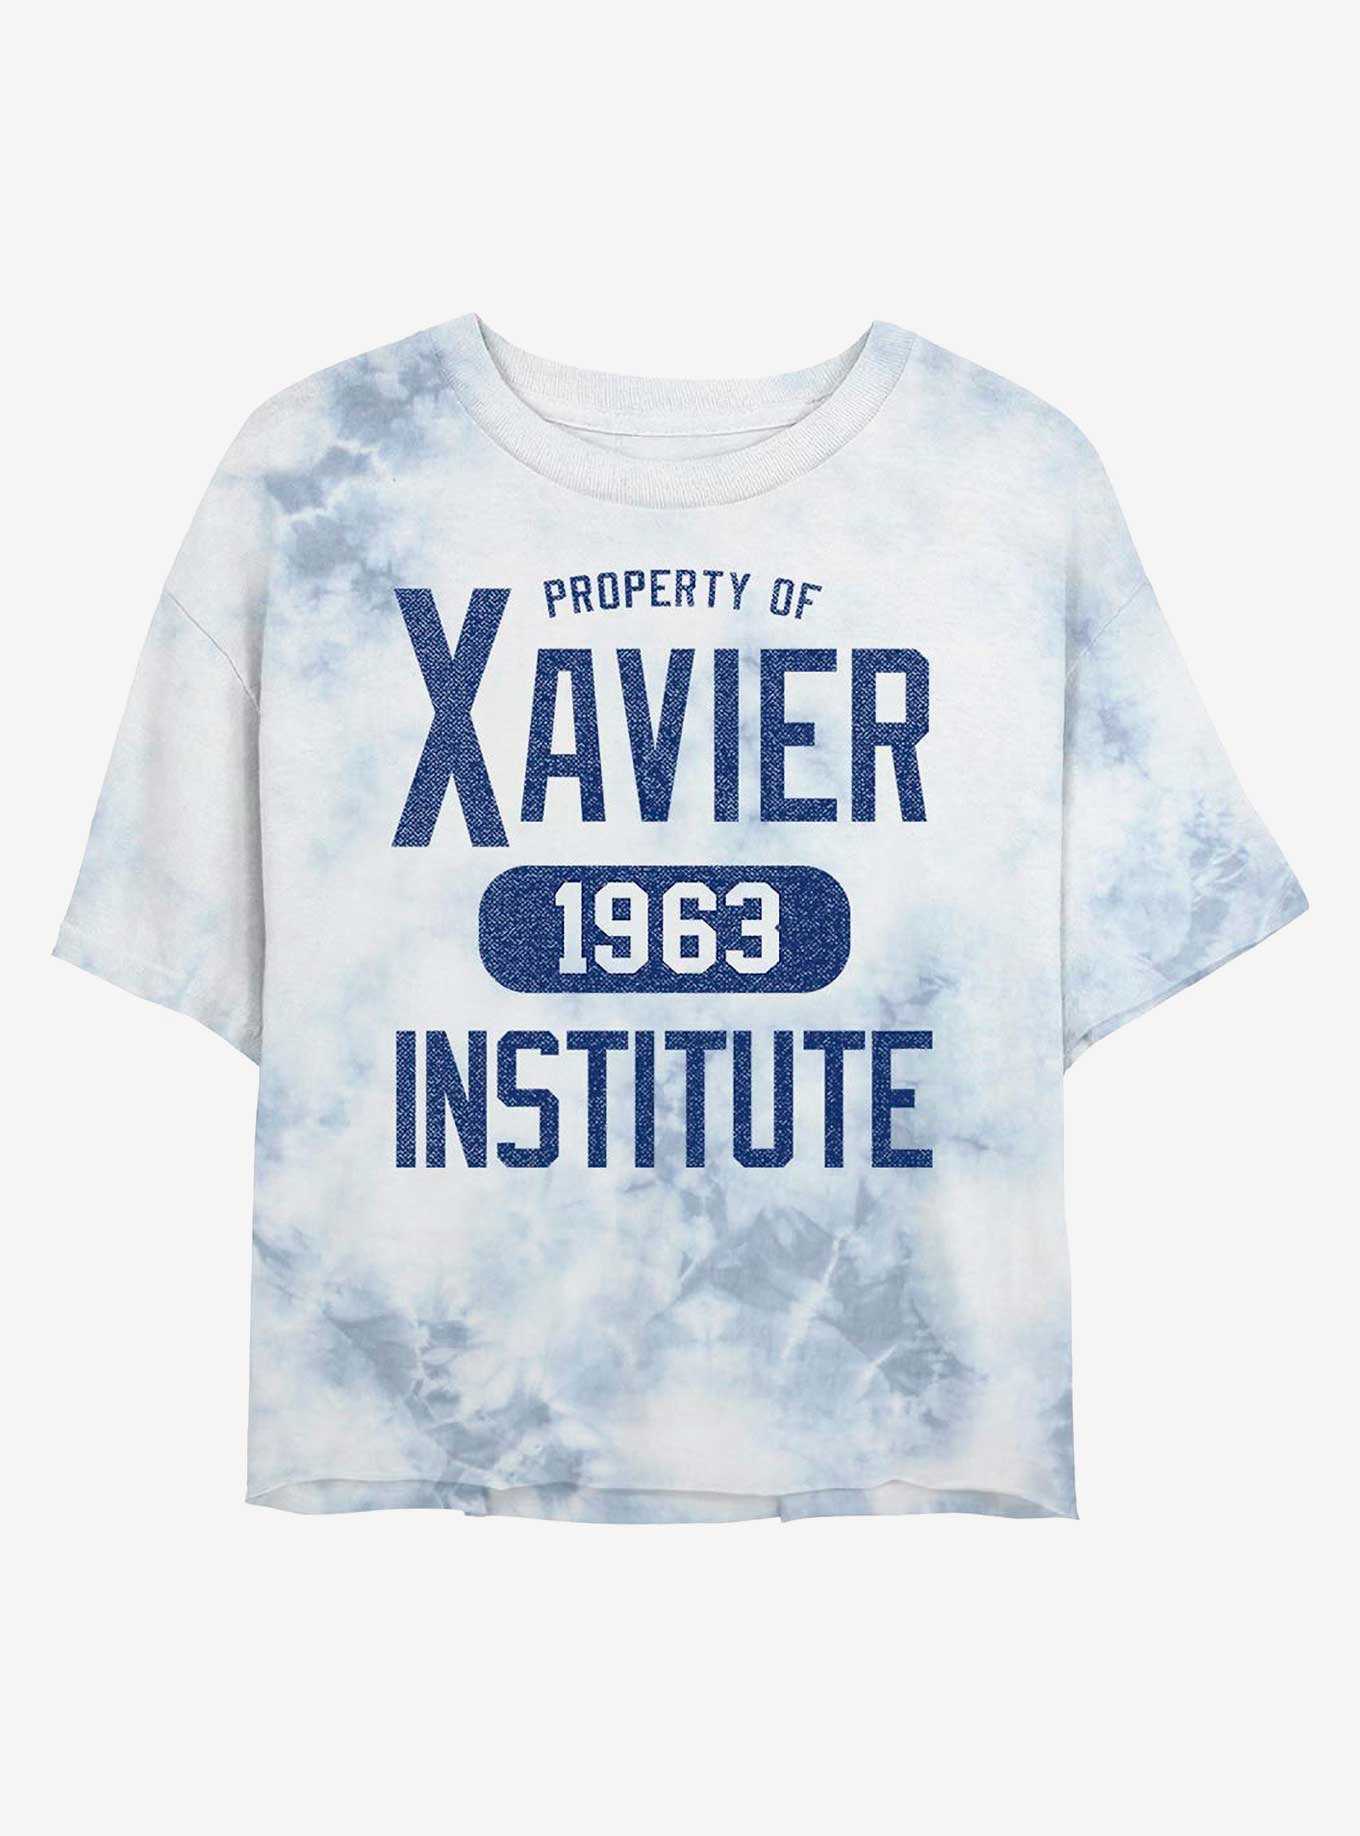 Marvel X-Men Xavier Institute Tie-Dye Girls Crop T-Shirt, , hi-res